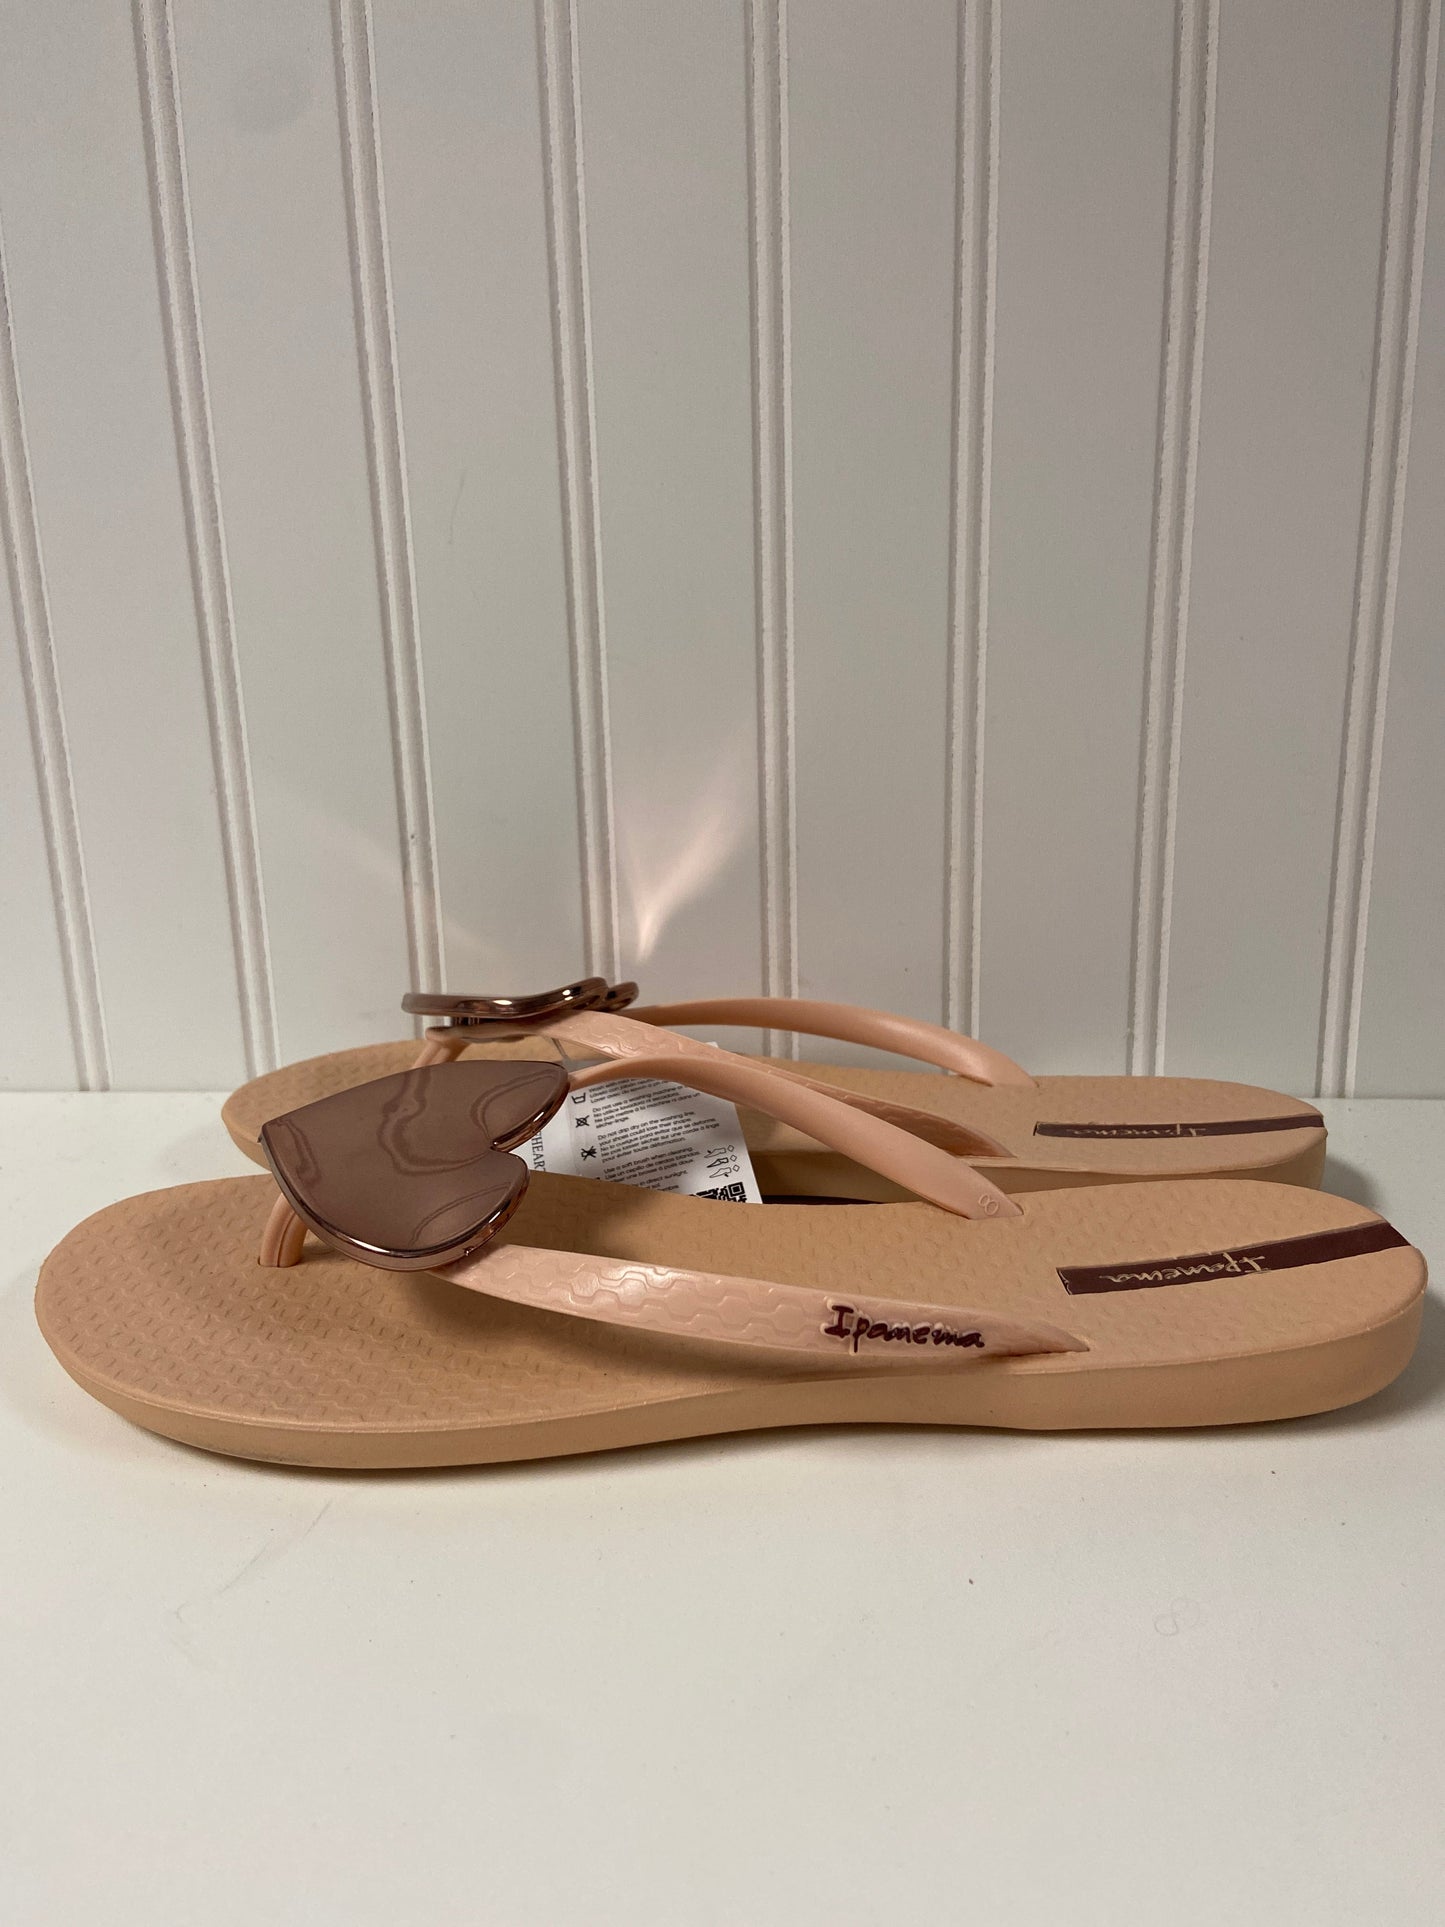 Sandals Flip Flops By Clothes Mentor  Size: 9